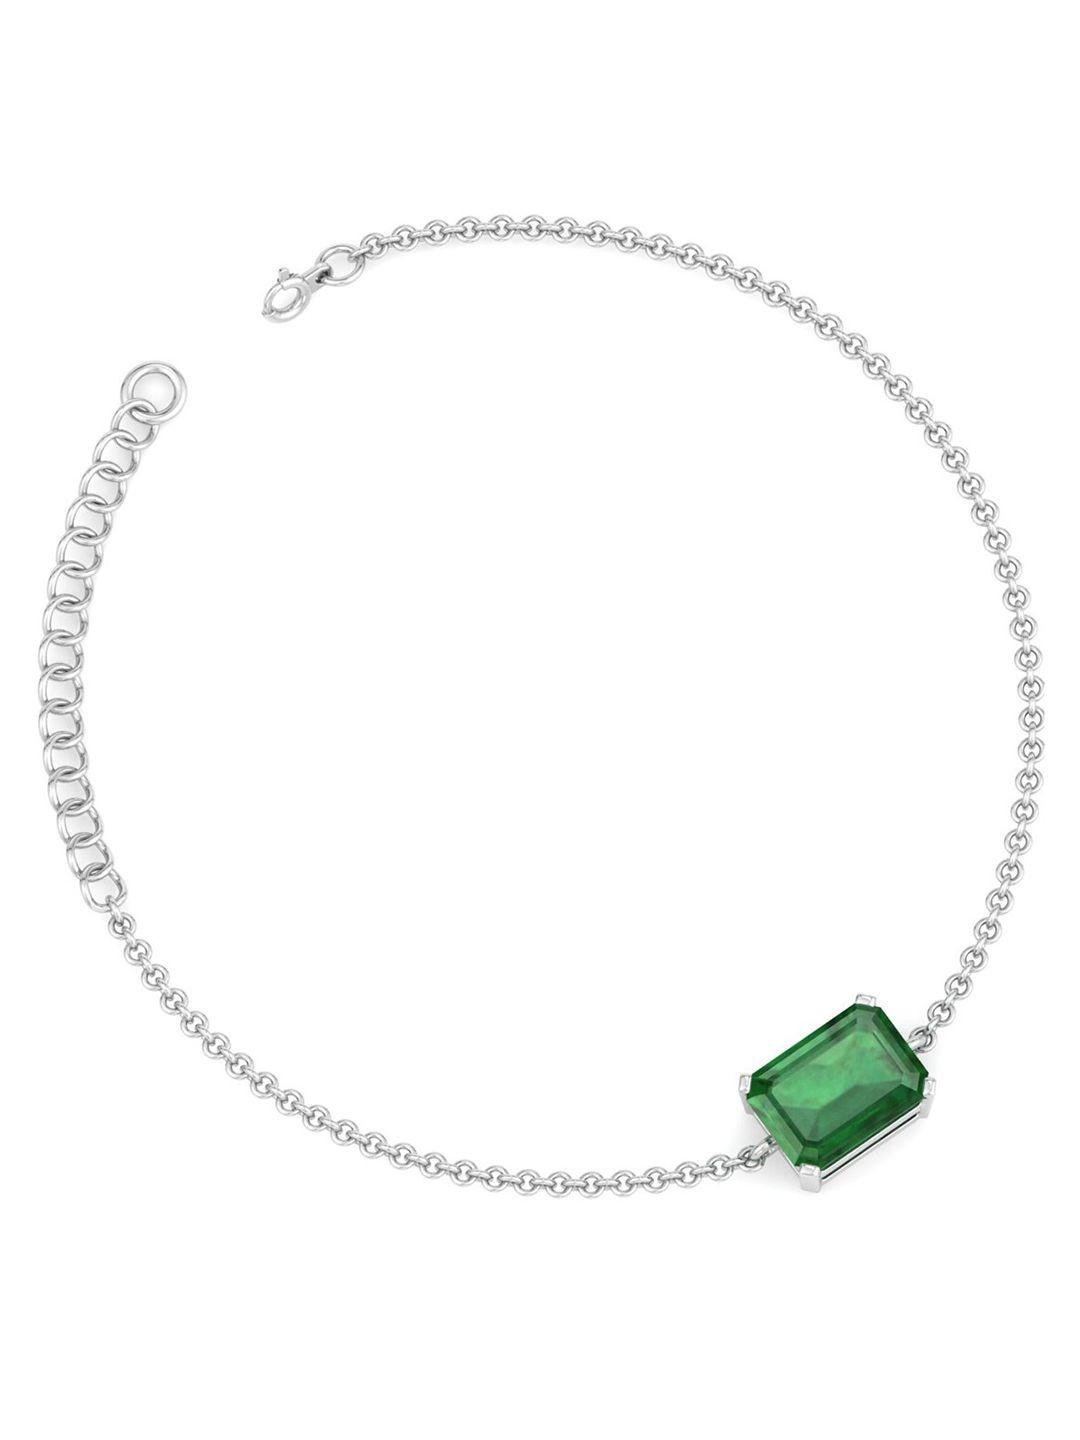 inddus jewels women sterling silver cubic zirconia link bracelet